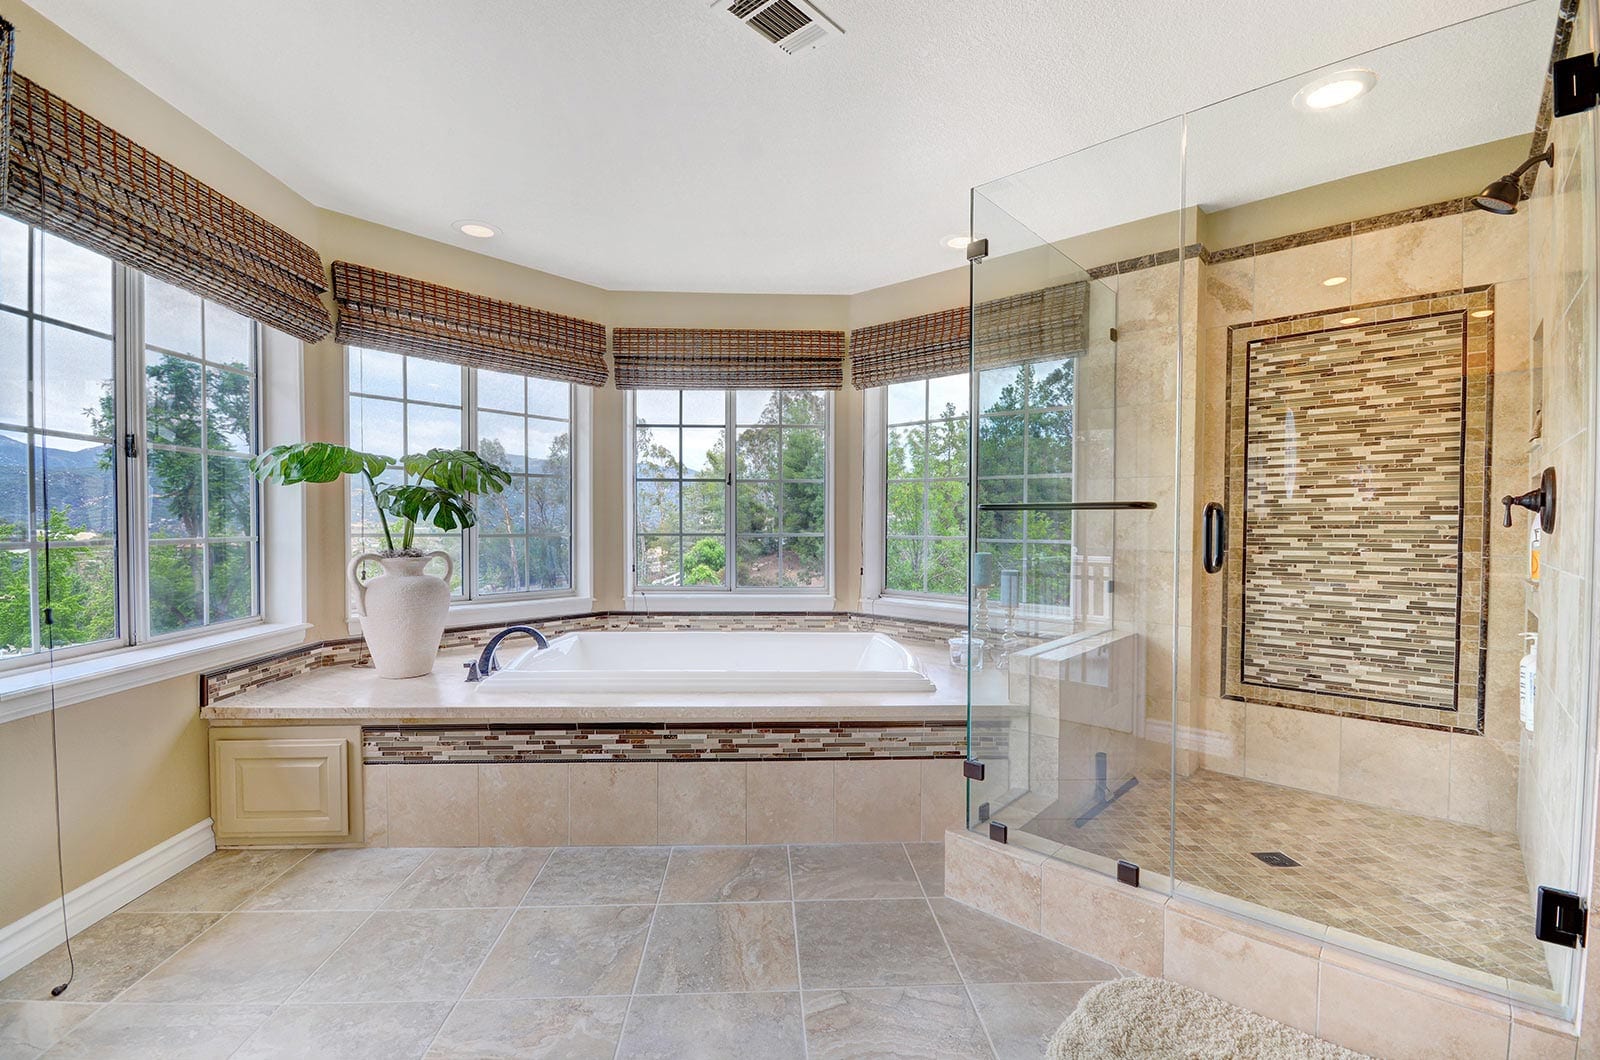 Bathroom interior Decor | Real Estate Photography | Real Estate Photographer | Photography For Real Estate